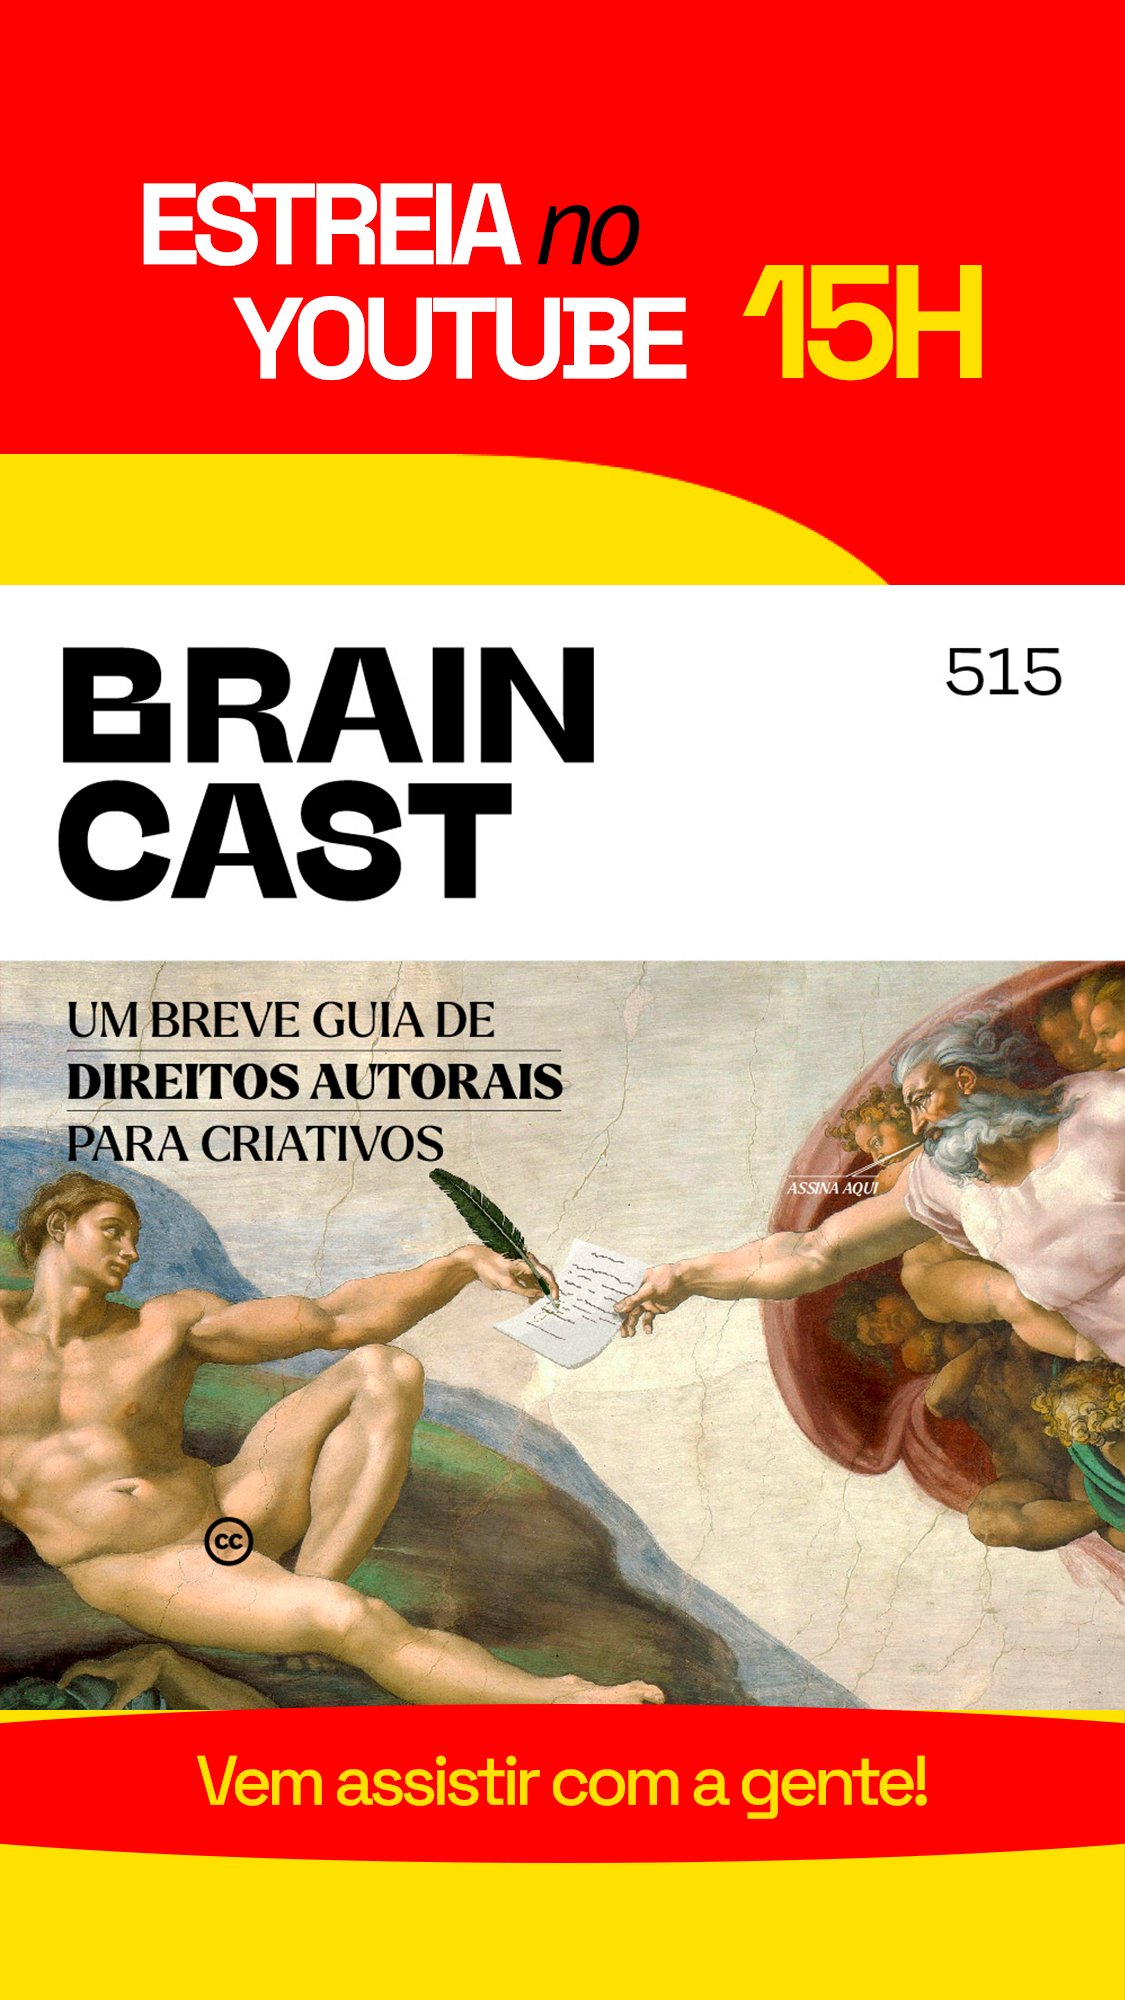 Braincast 438 - Topzera 2021 • B9